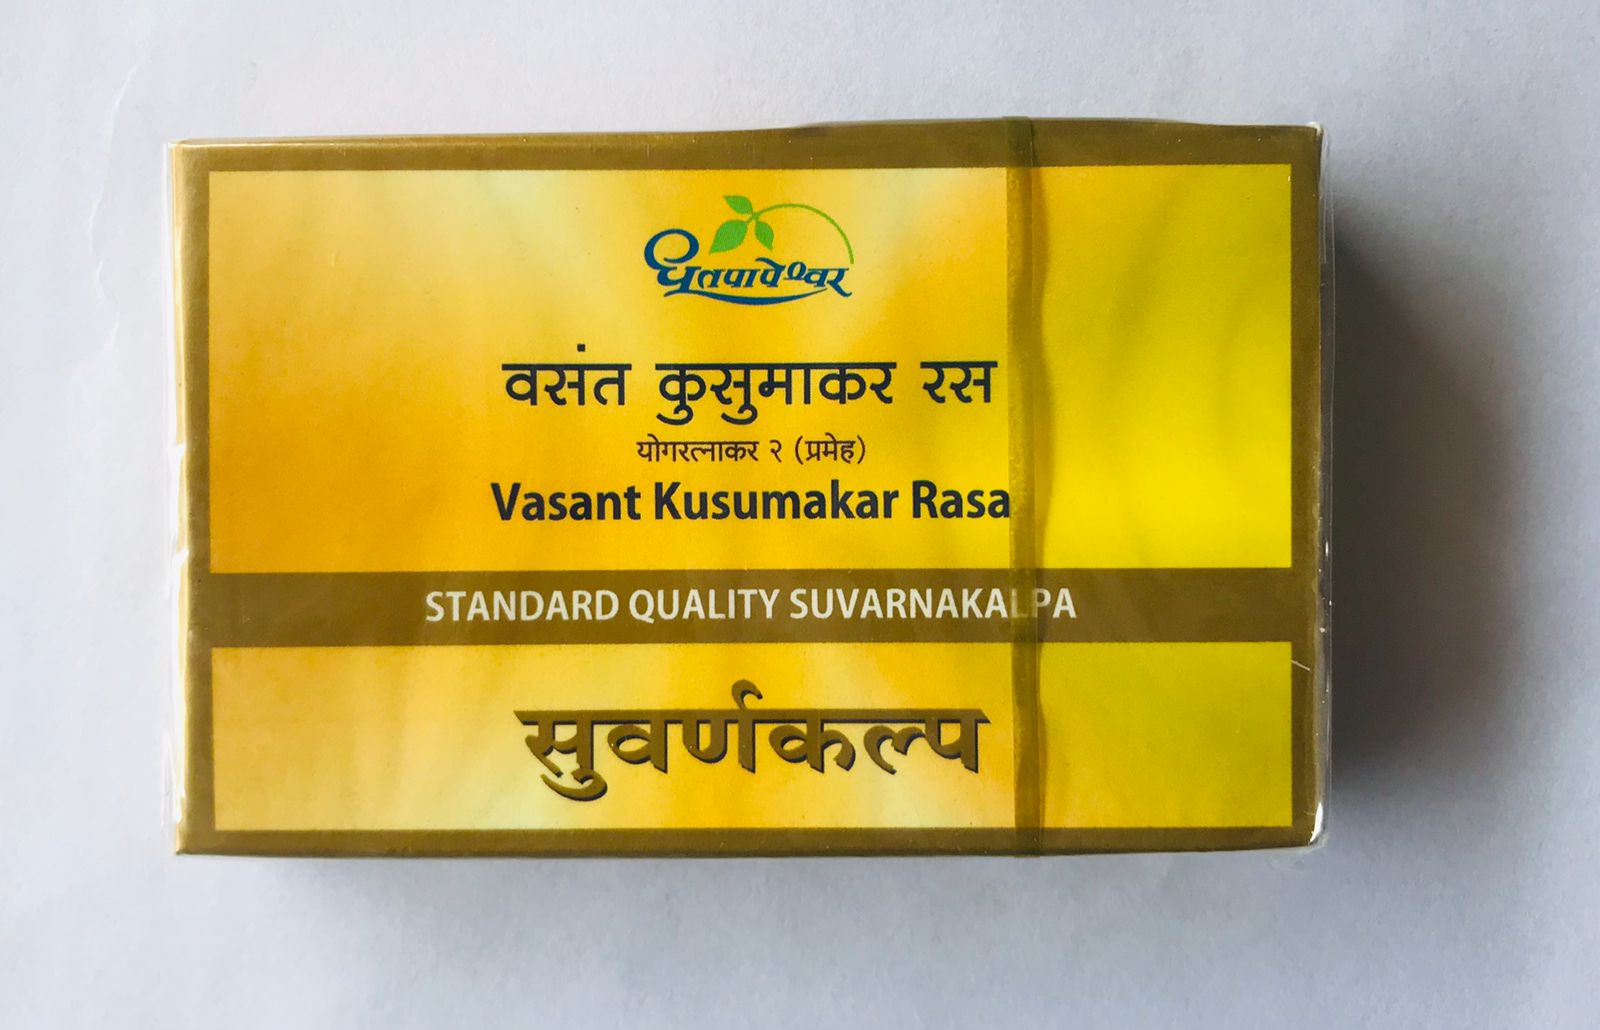 Dhootapapeshwar Standard Vasant Kusumakar Rasa, 10 Tablets, Pack of 1 